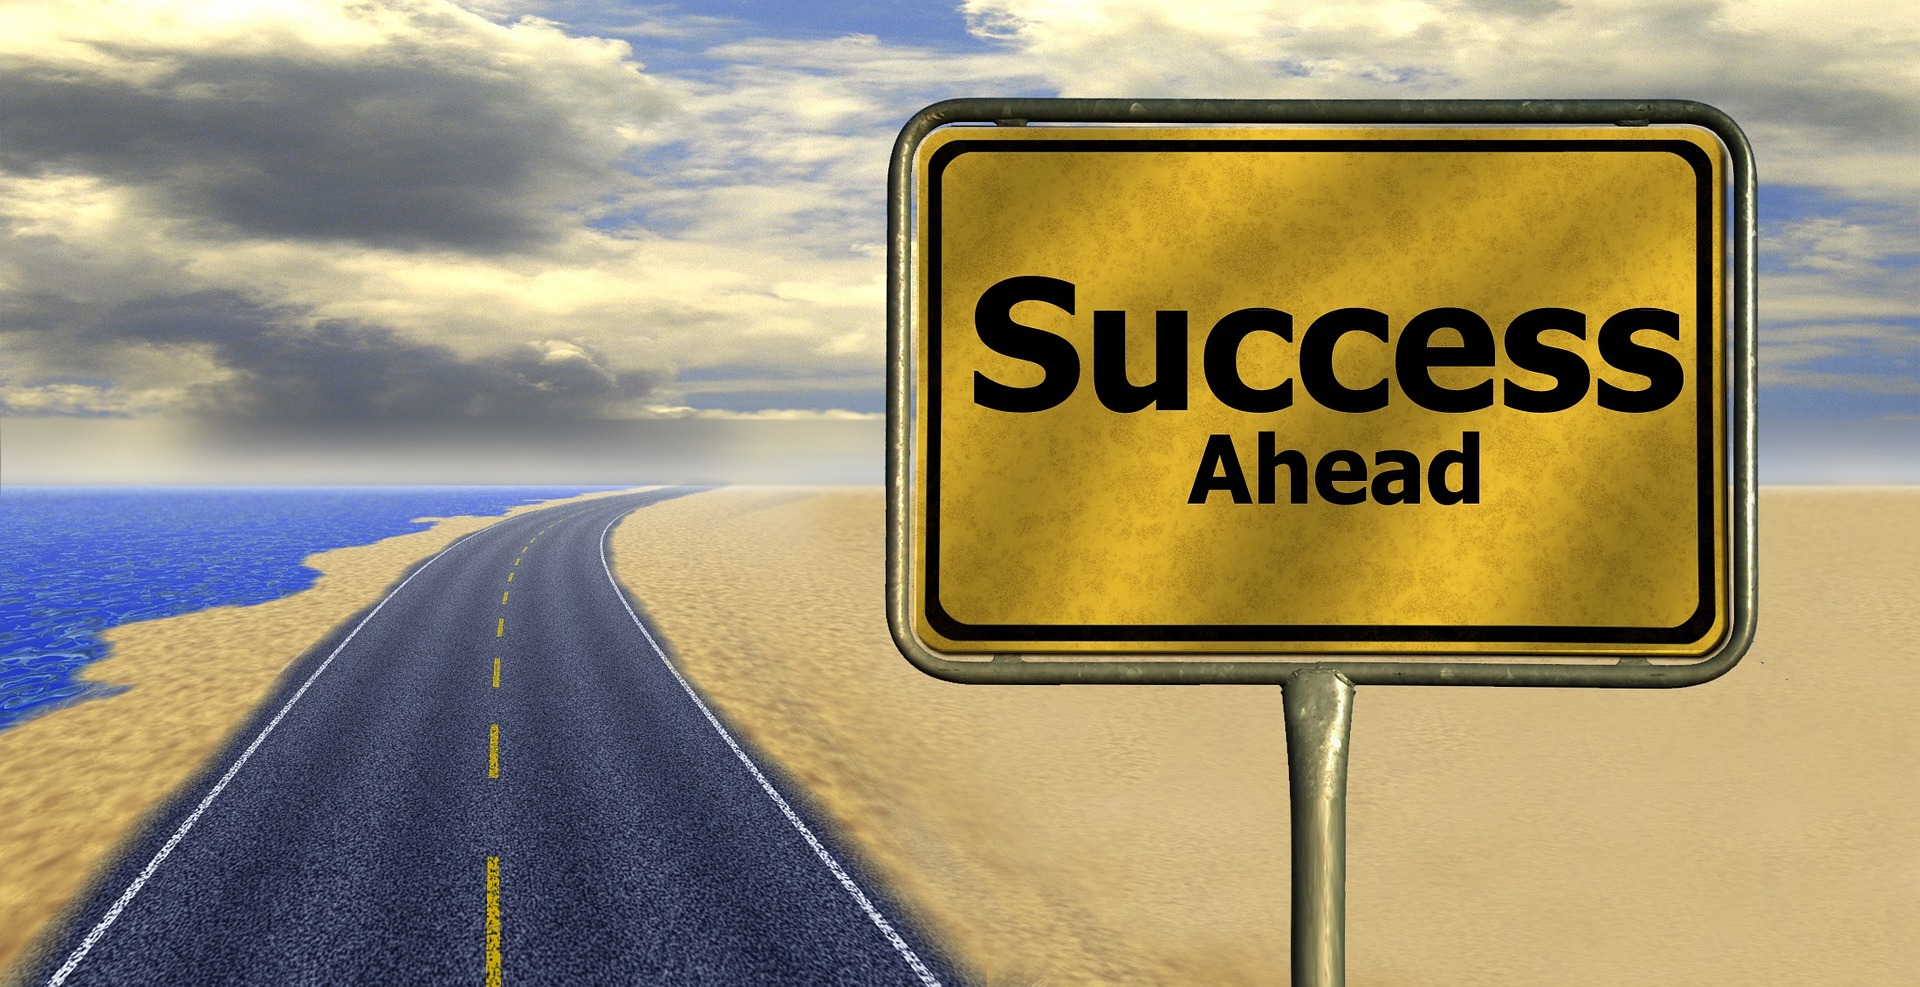 Success Ahead - Image by Gerd Altmann - Pixabay